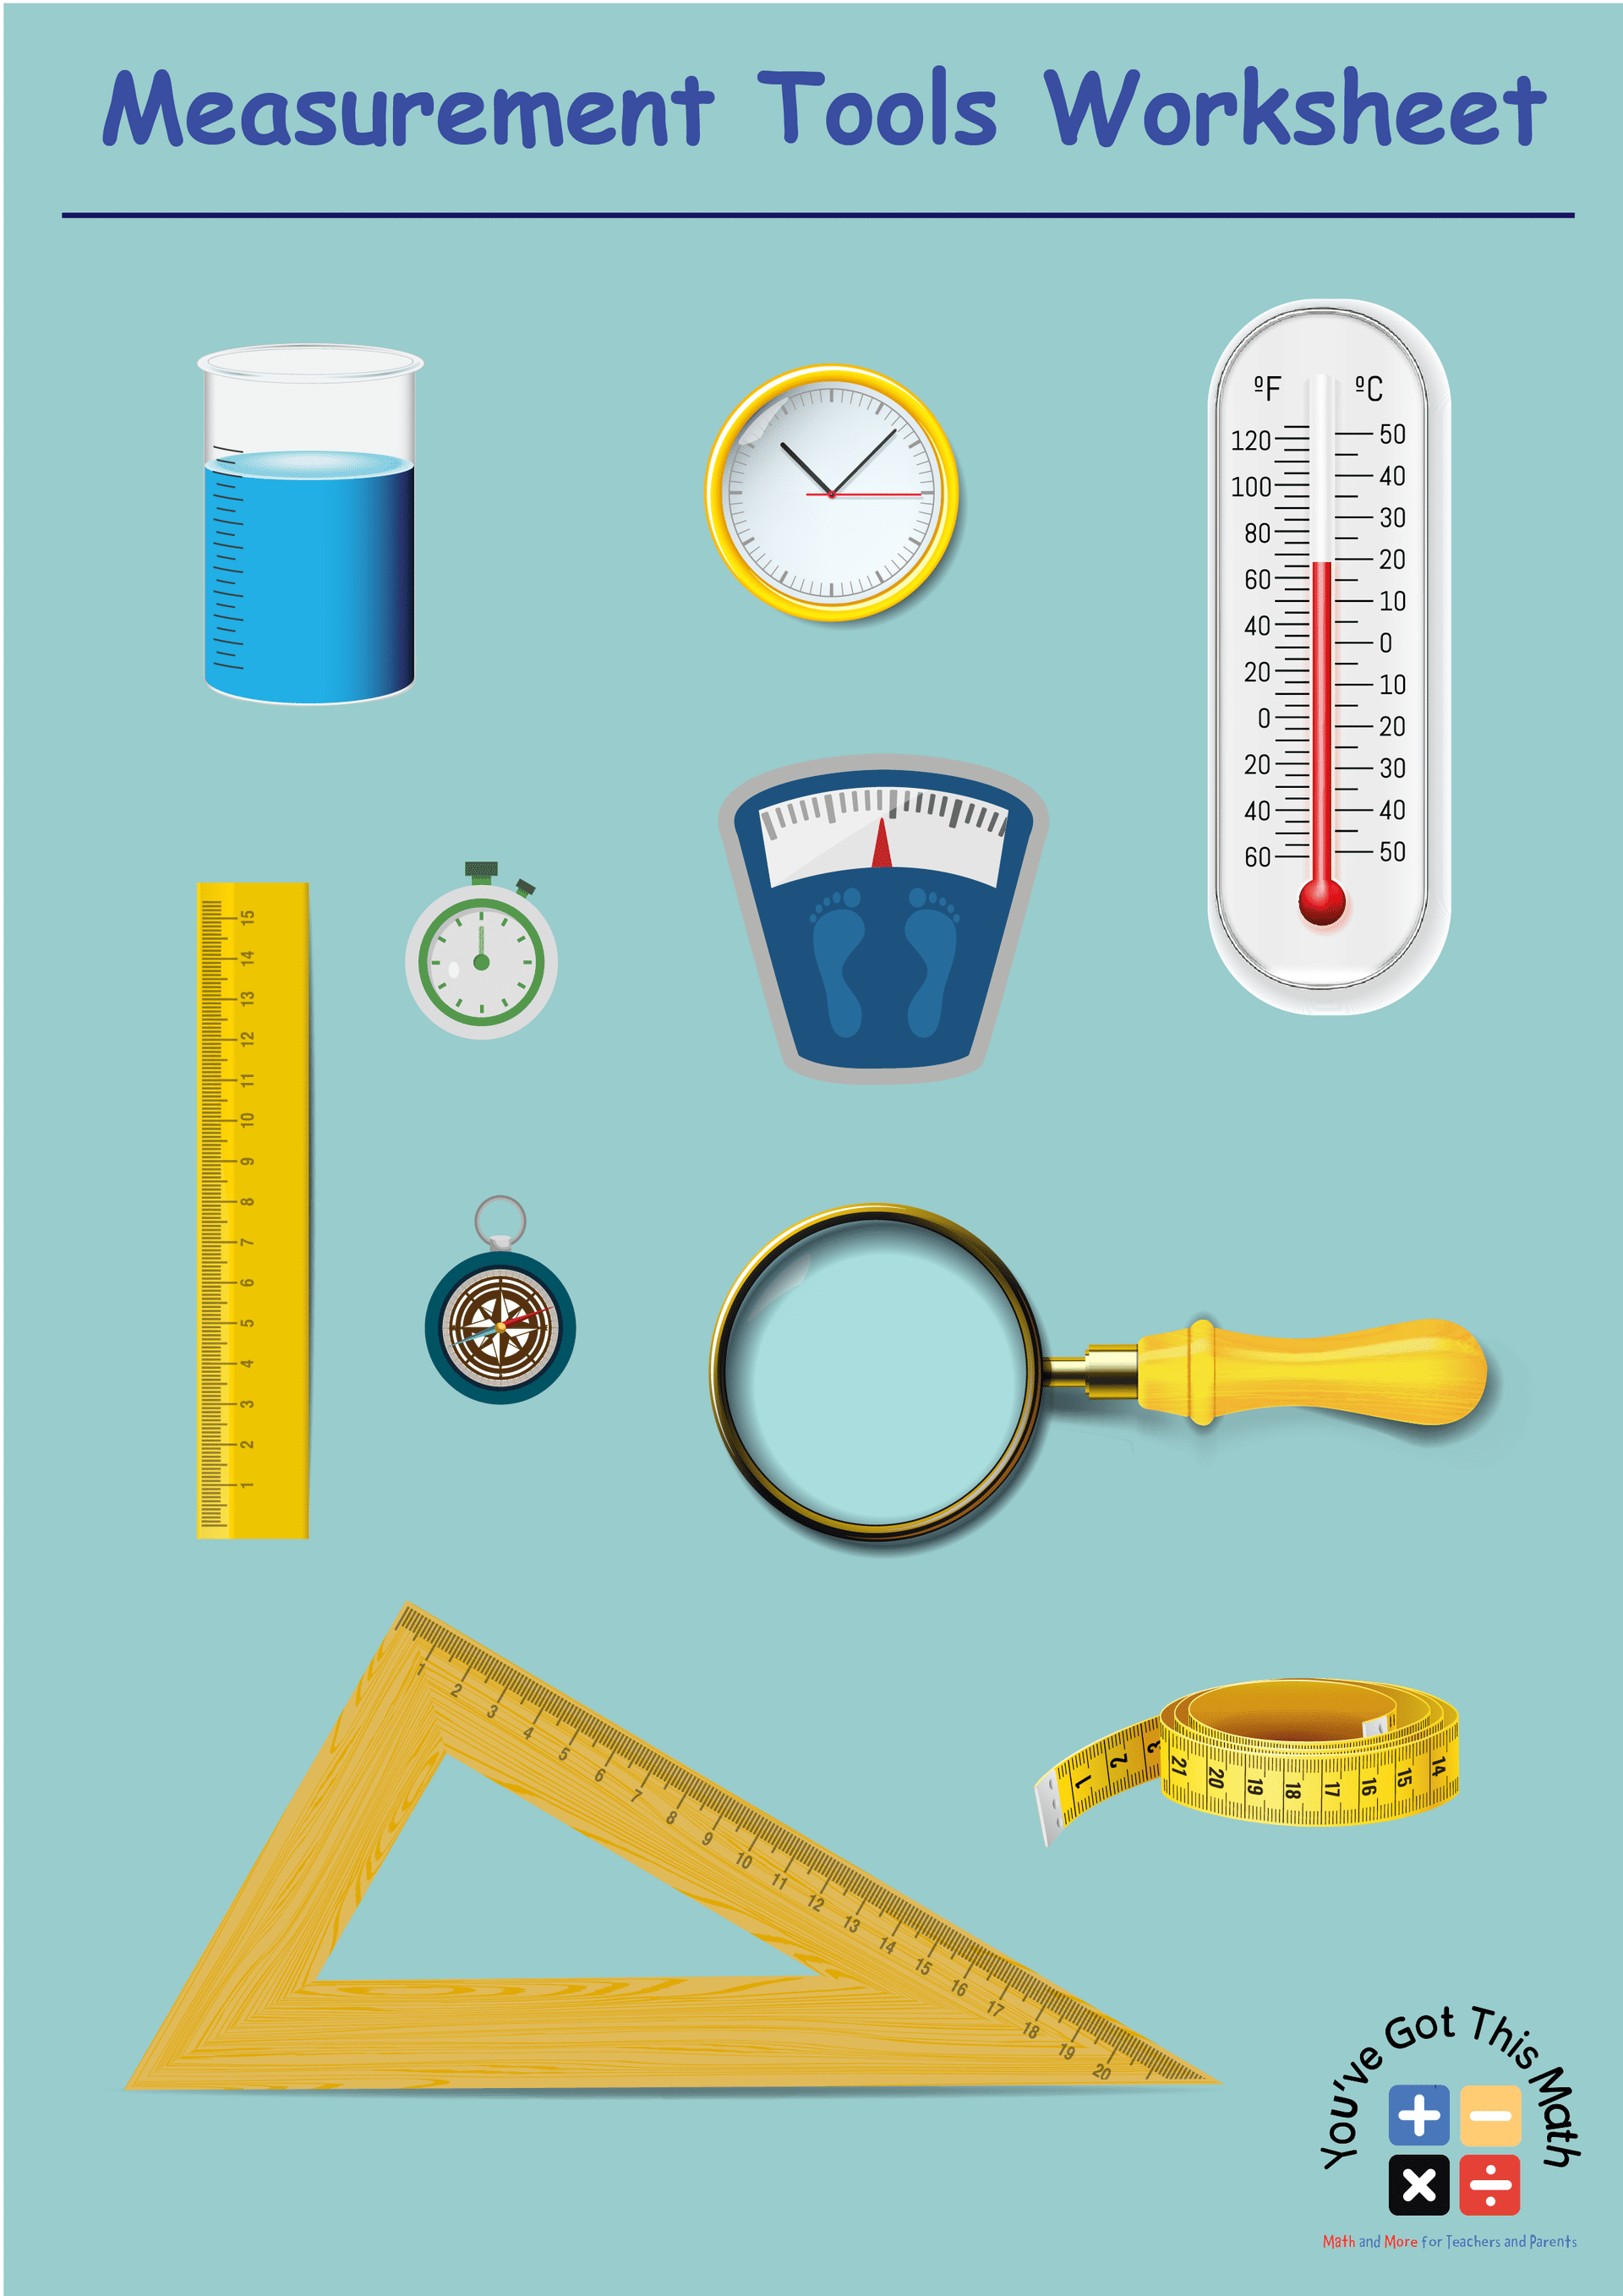 5 Measurement Tools Worksheet | 20 + Free Pages